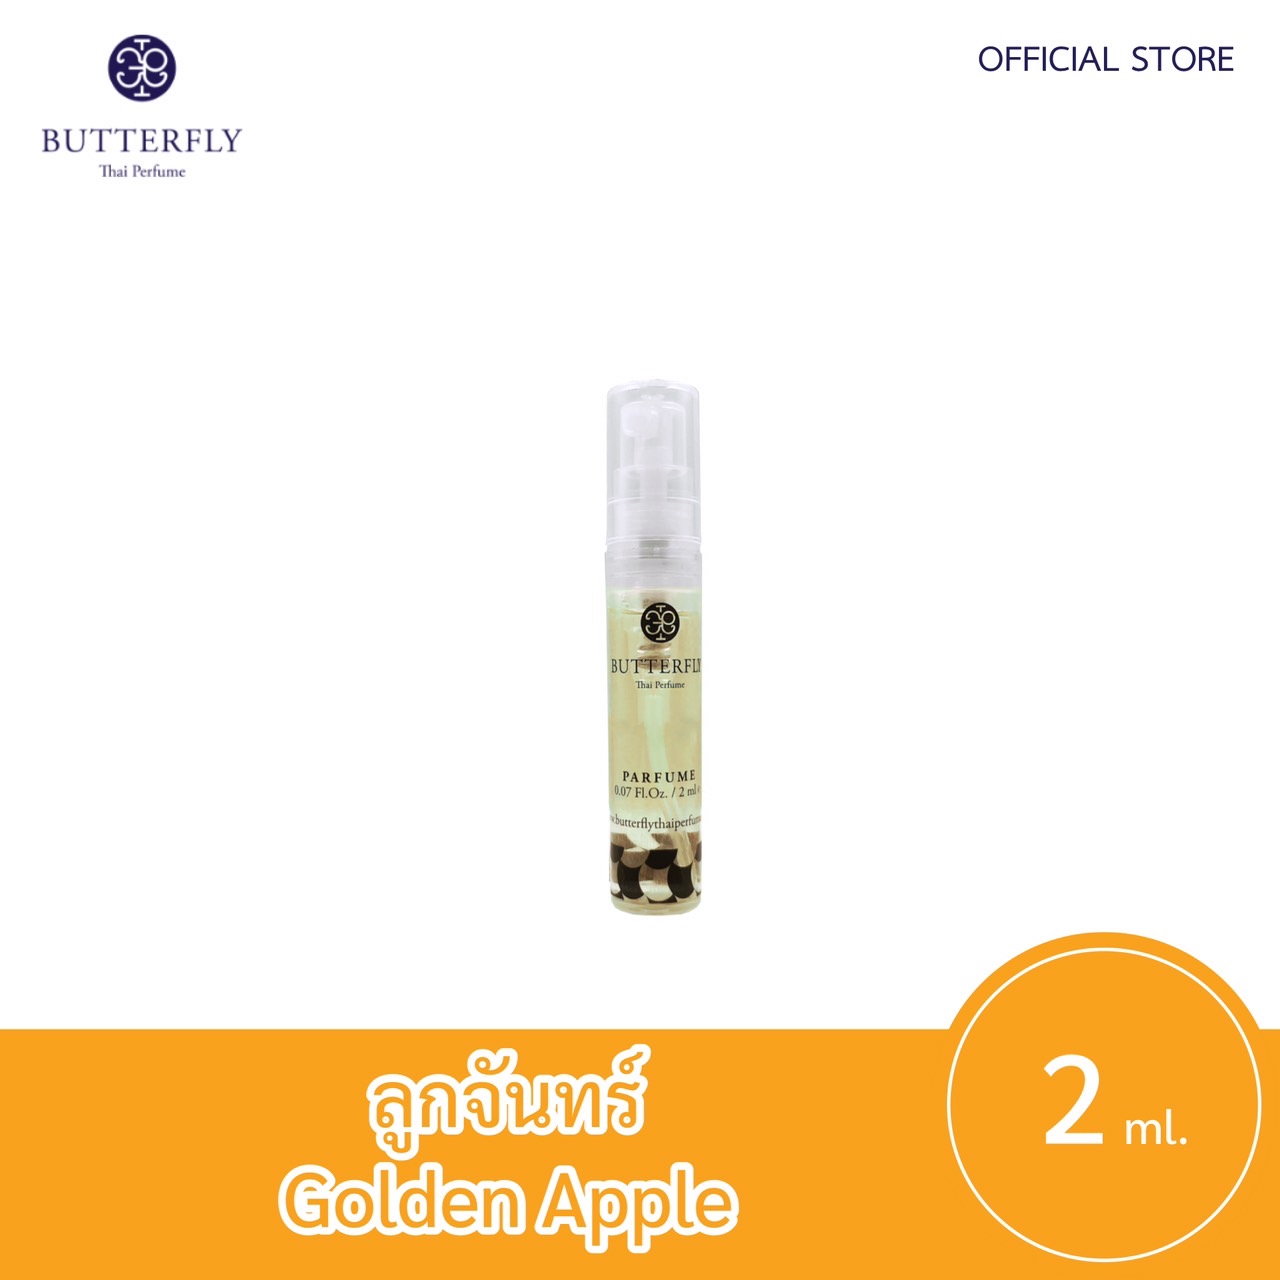 Butterfly Thai Perfume - น้ำหอมบัตเตอร์ฟลาย ไทย เพอร์ฟูม  ขนาดทดลอง 2ml.  กลิ่น ์New ลูกจันทร์ปริมาณ (มล.) 2